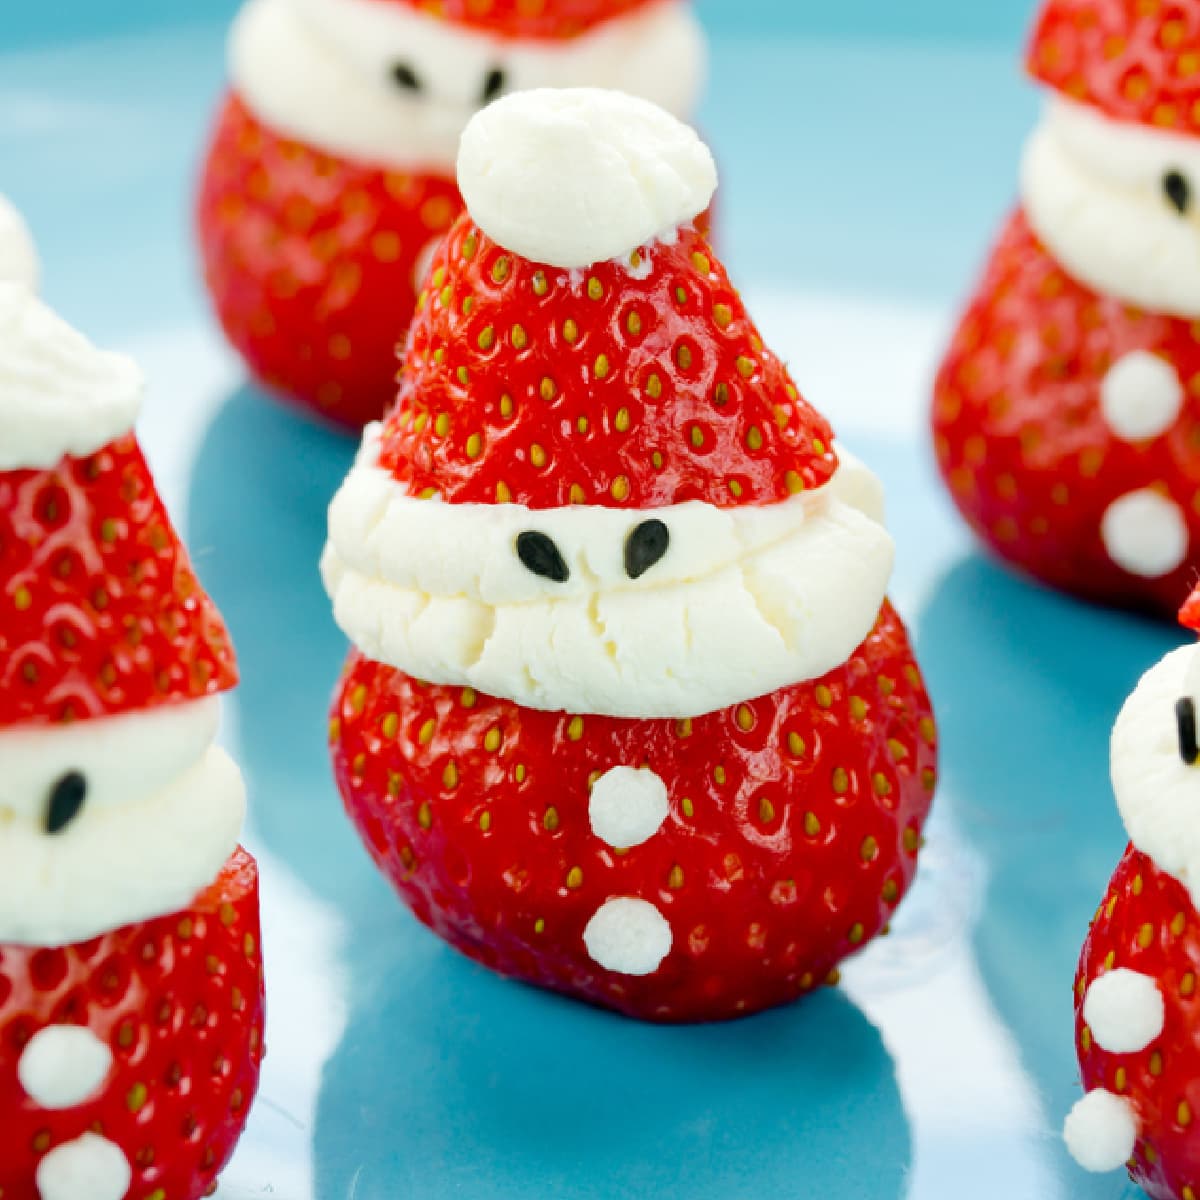 Strawberry Cheesecake Santas feature